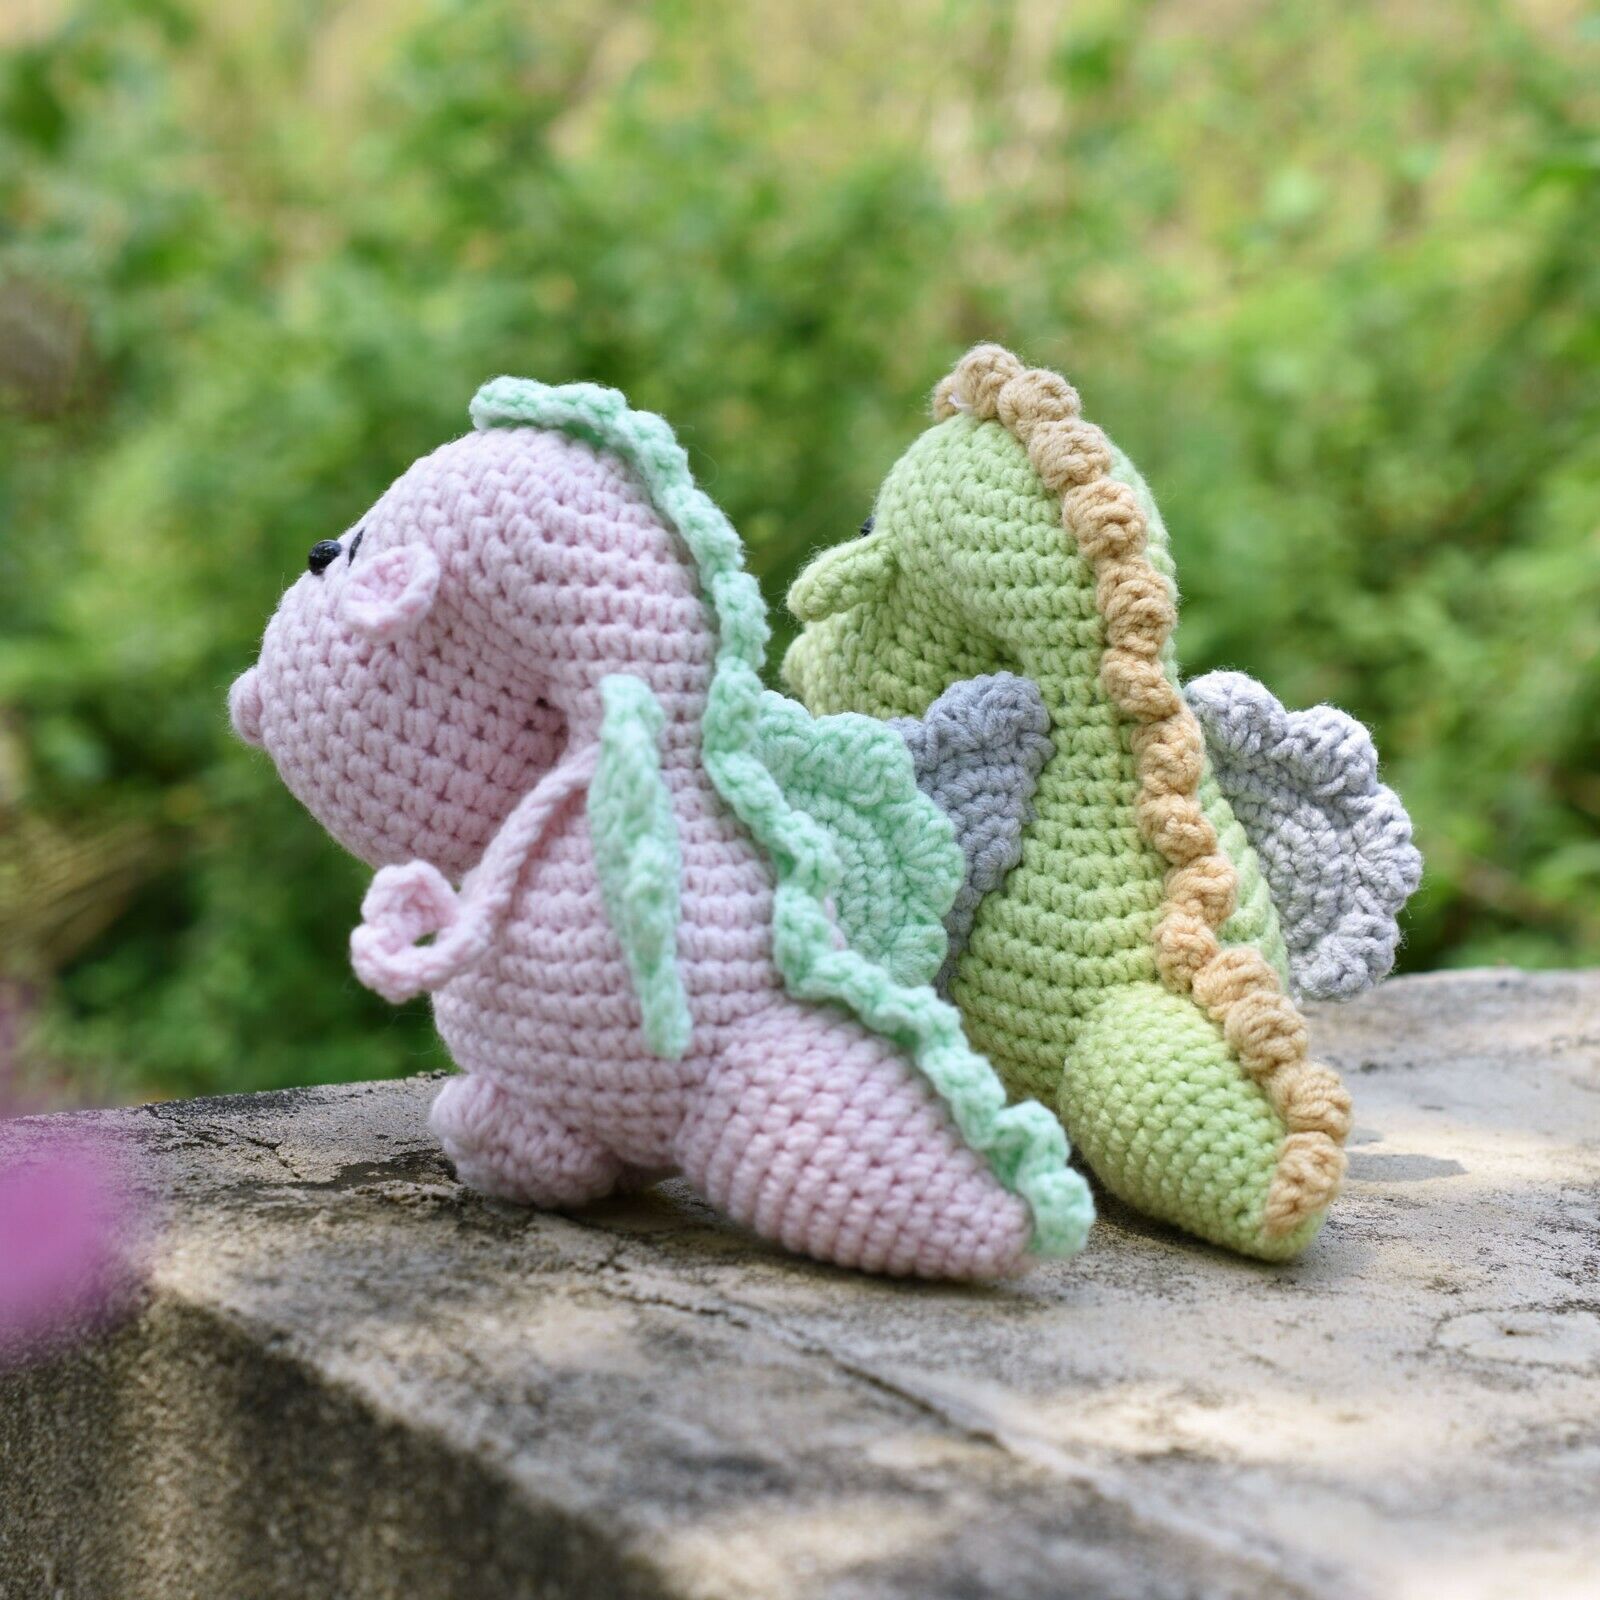 Amigurumi Baby Dragon Free Crochet Patterns Free Amigurumi Patterns